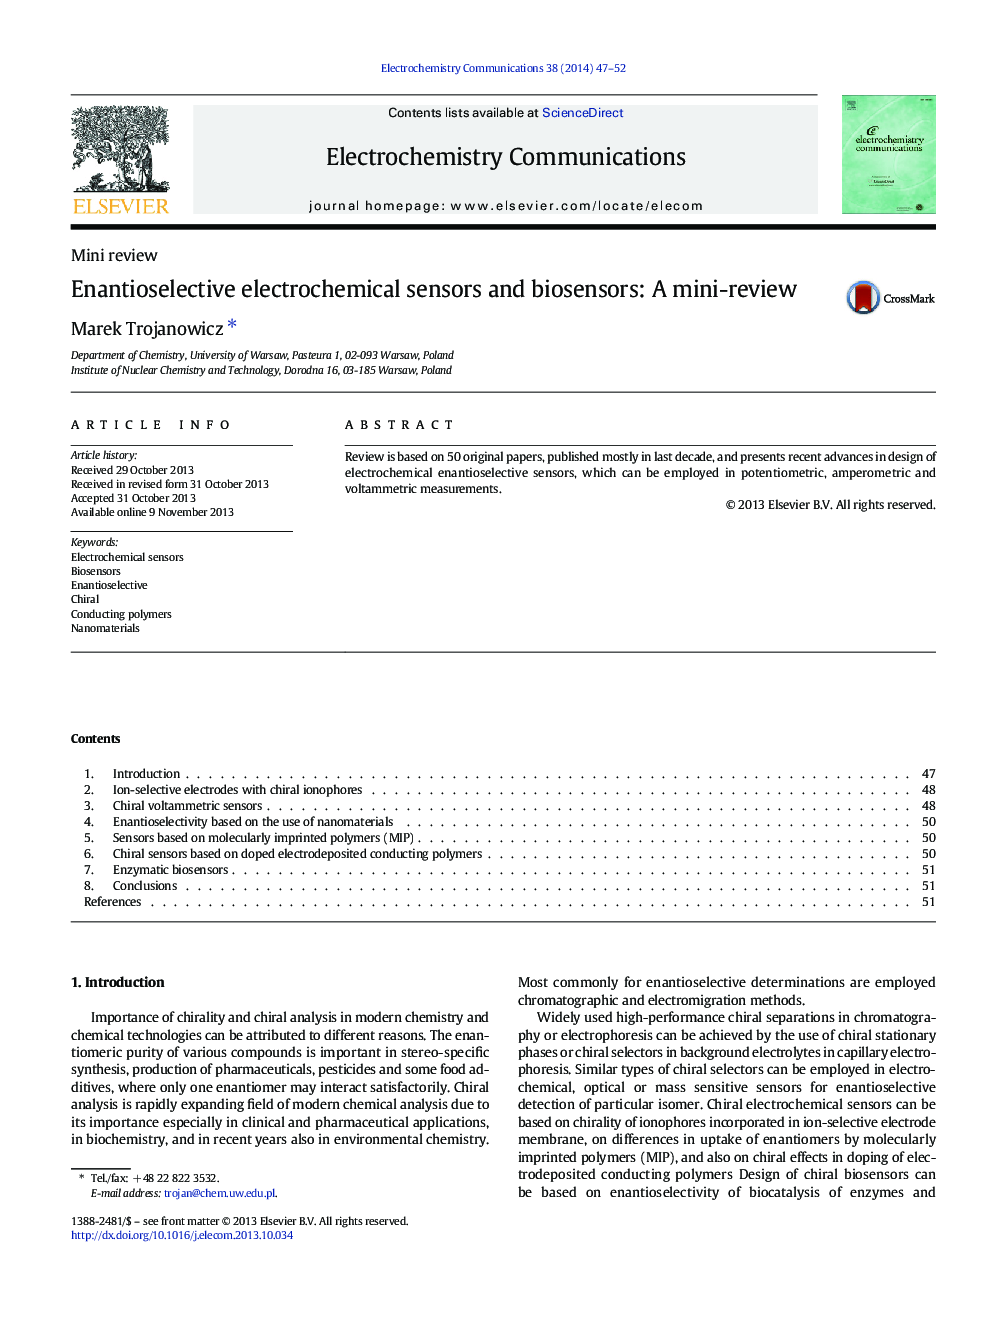 Enantioselective electrochemical sensors and biosensors: A mini-review